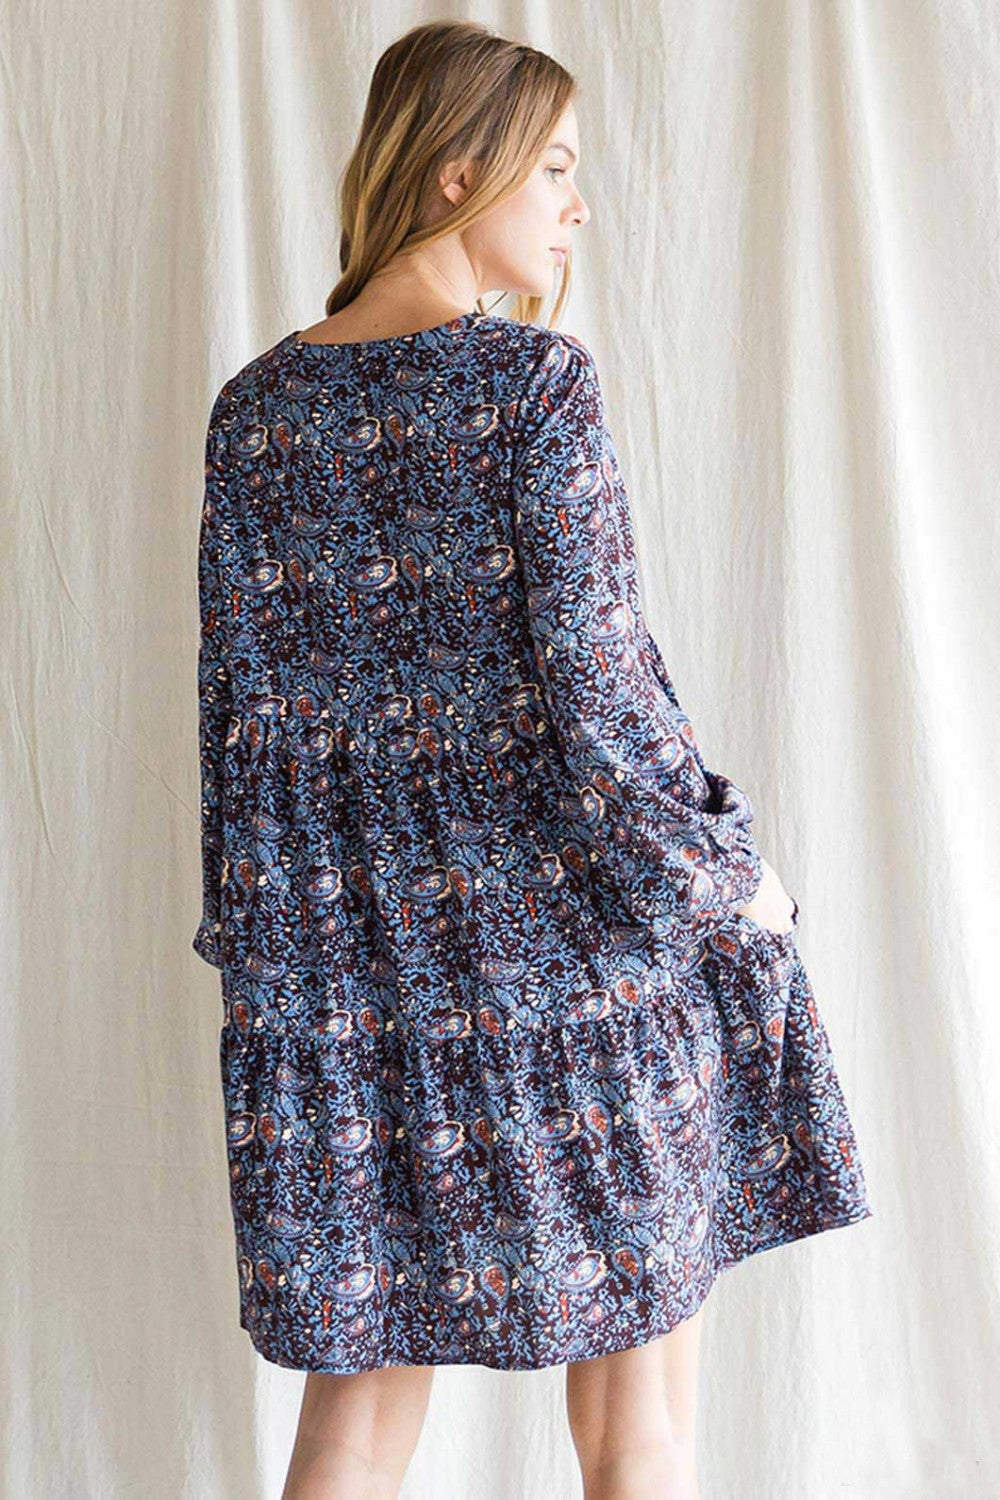 Cotton Bleu Boho Paisley Print Dress Back.